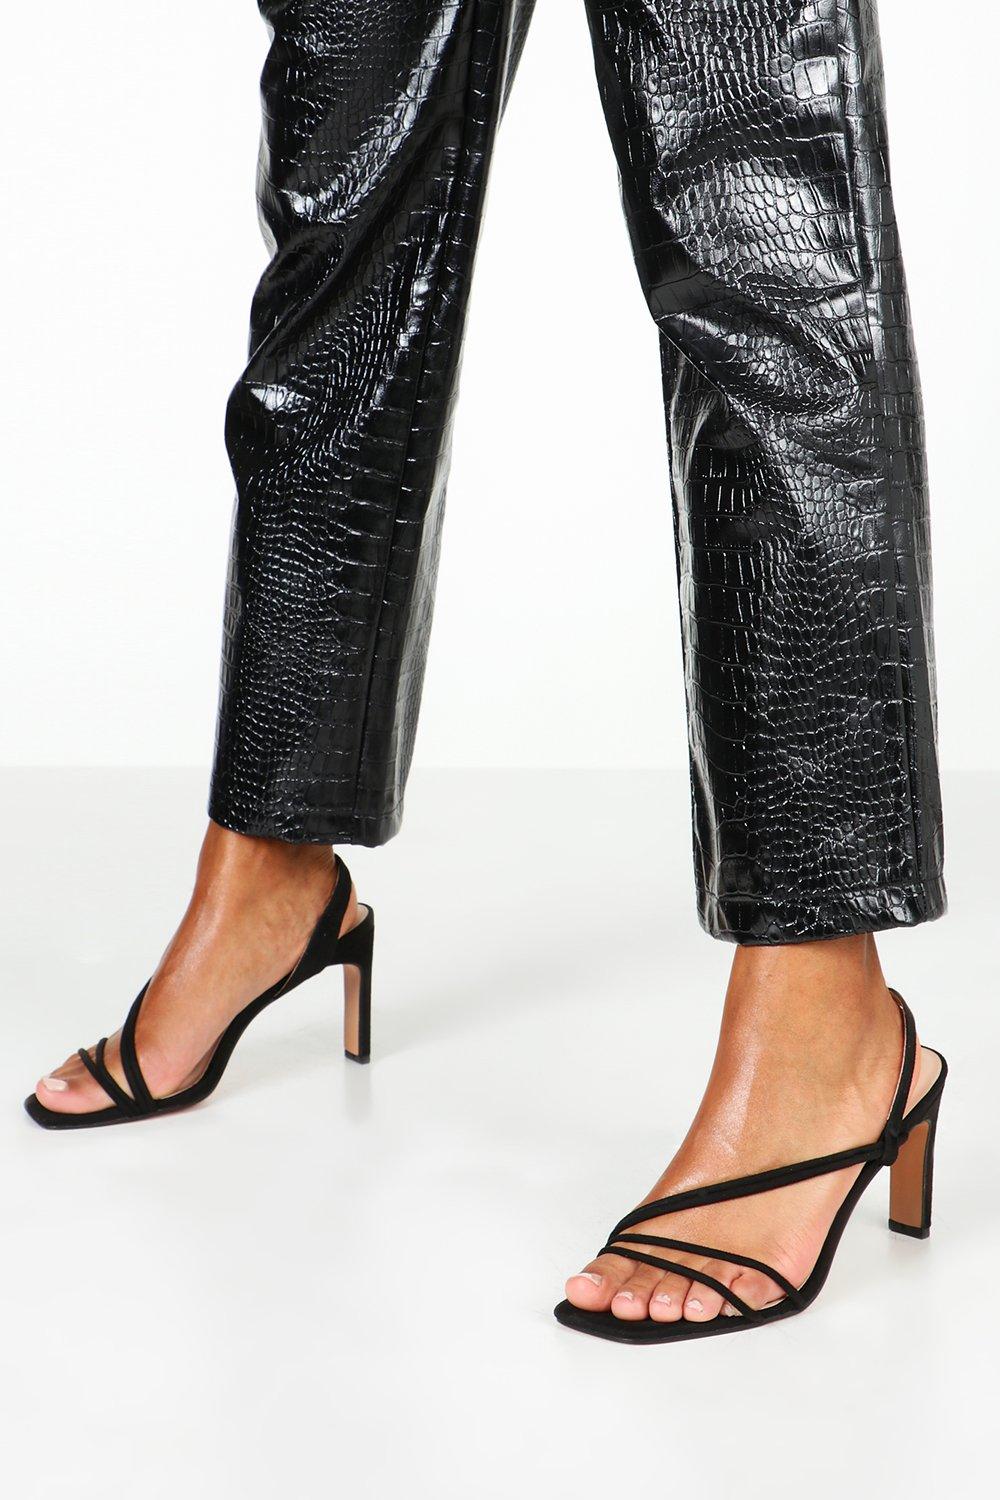 black strappy low heels